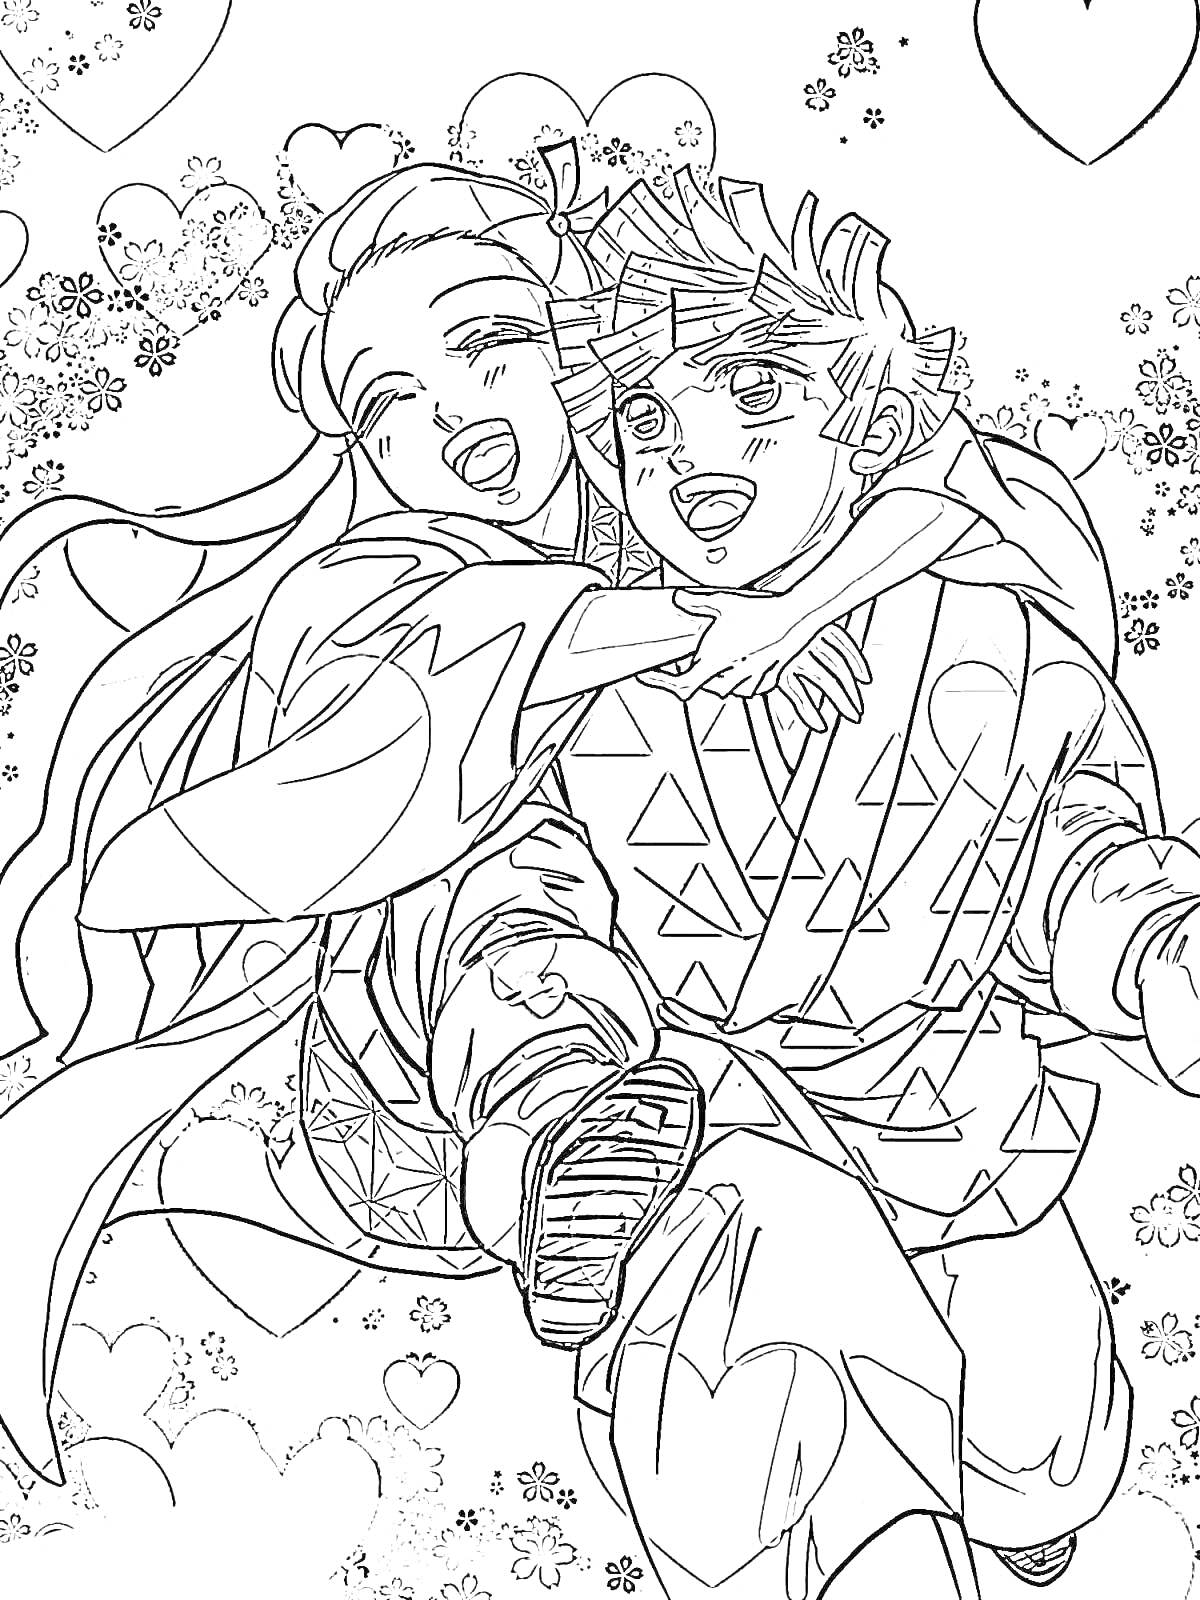 Раскраска Незуко и Зеницу, обнимающиеся на фоне цветов и сердечек